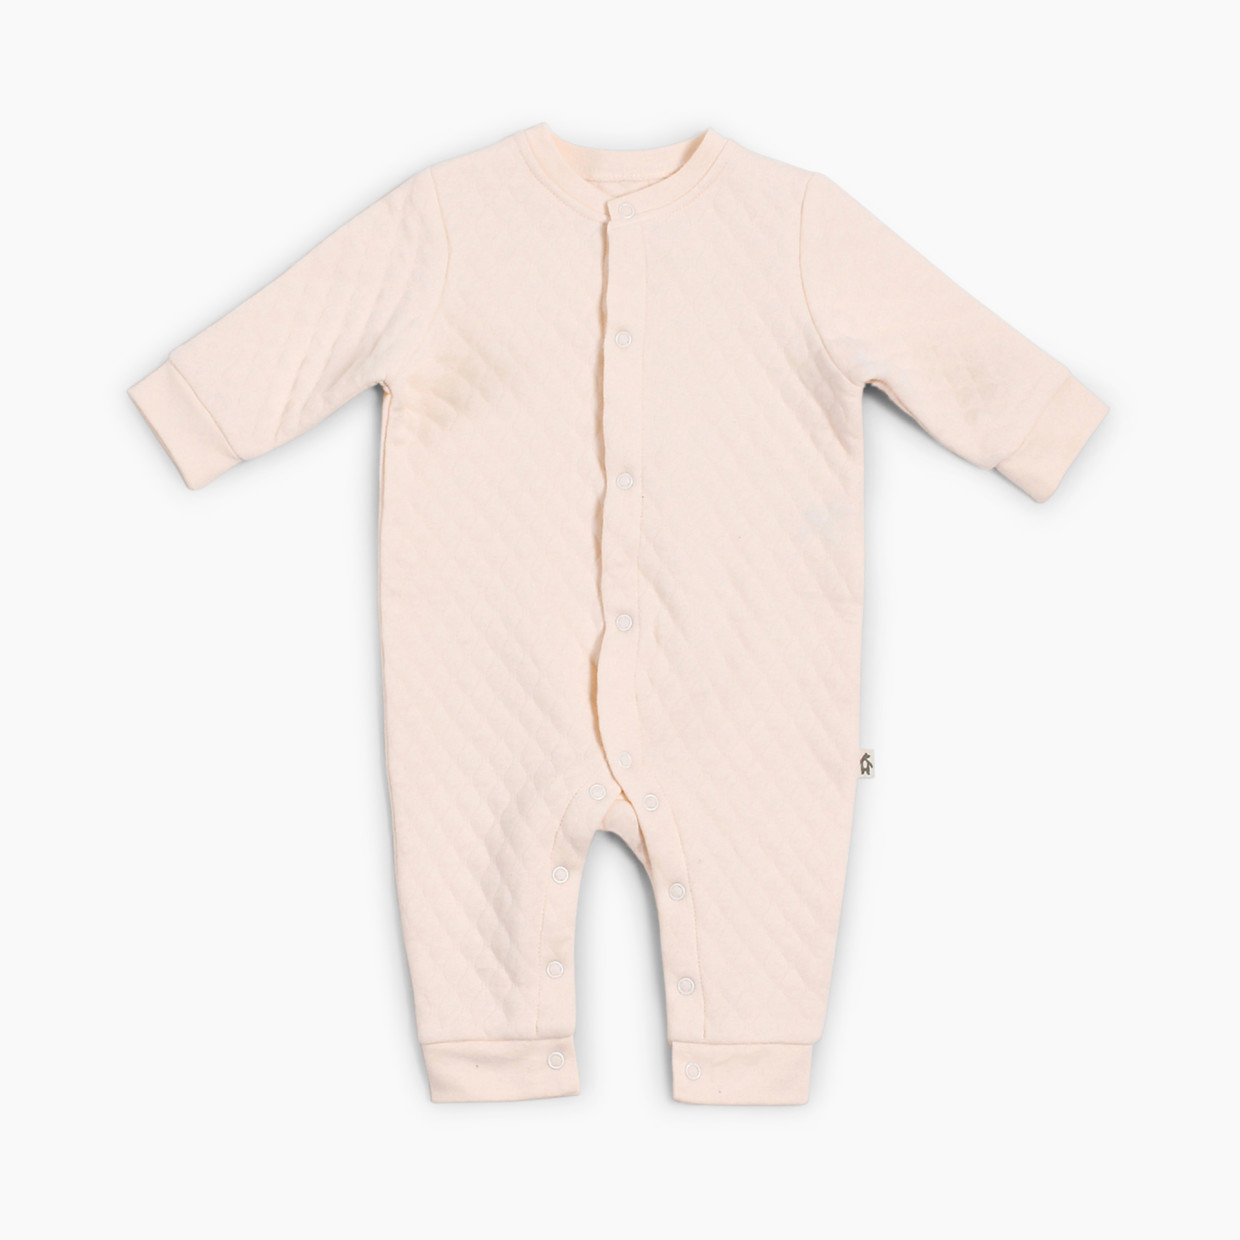 Snugabye Cozy Quilted Jumpsuit - Pink, 0-3 Months.